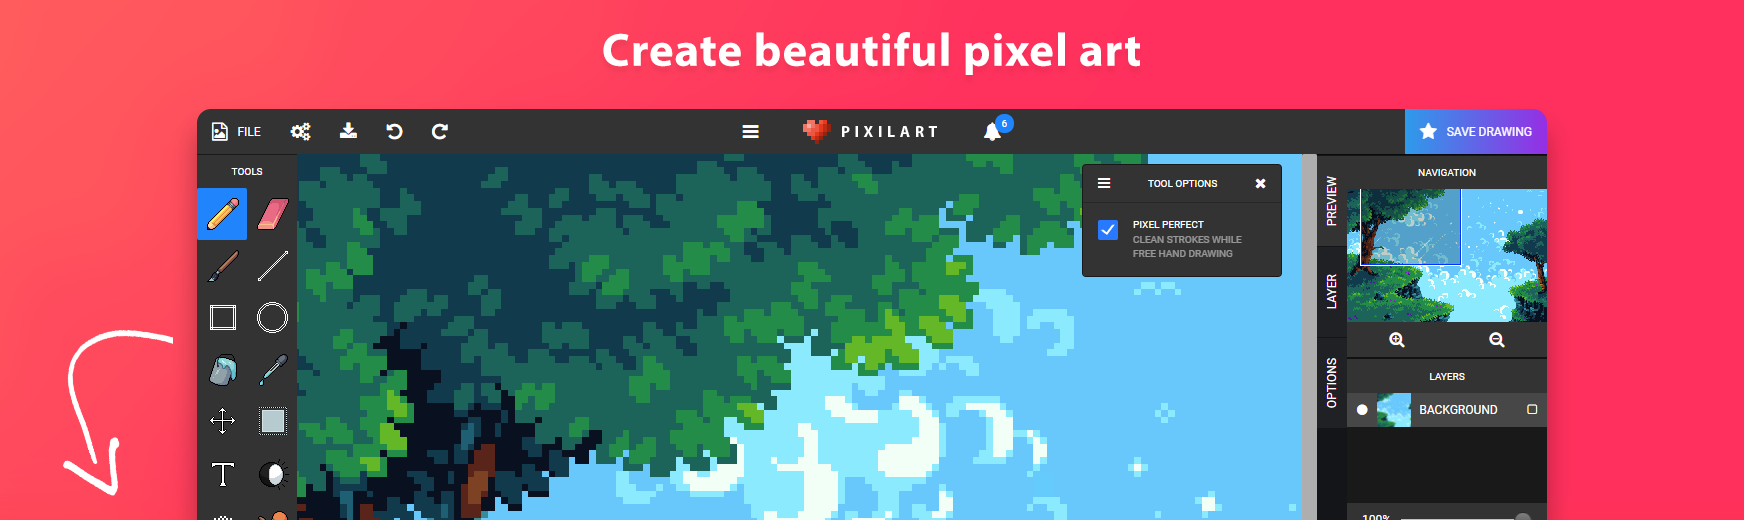 Make Pixel Art Online Pixilart Com By Pixilart